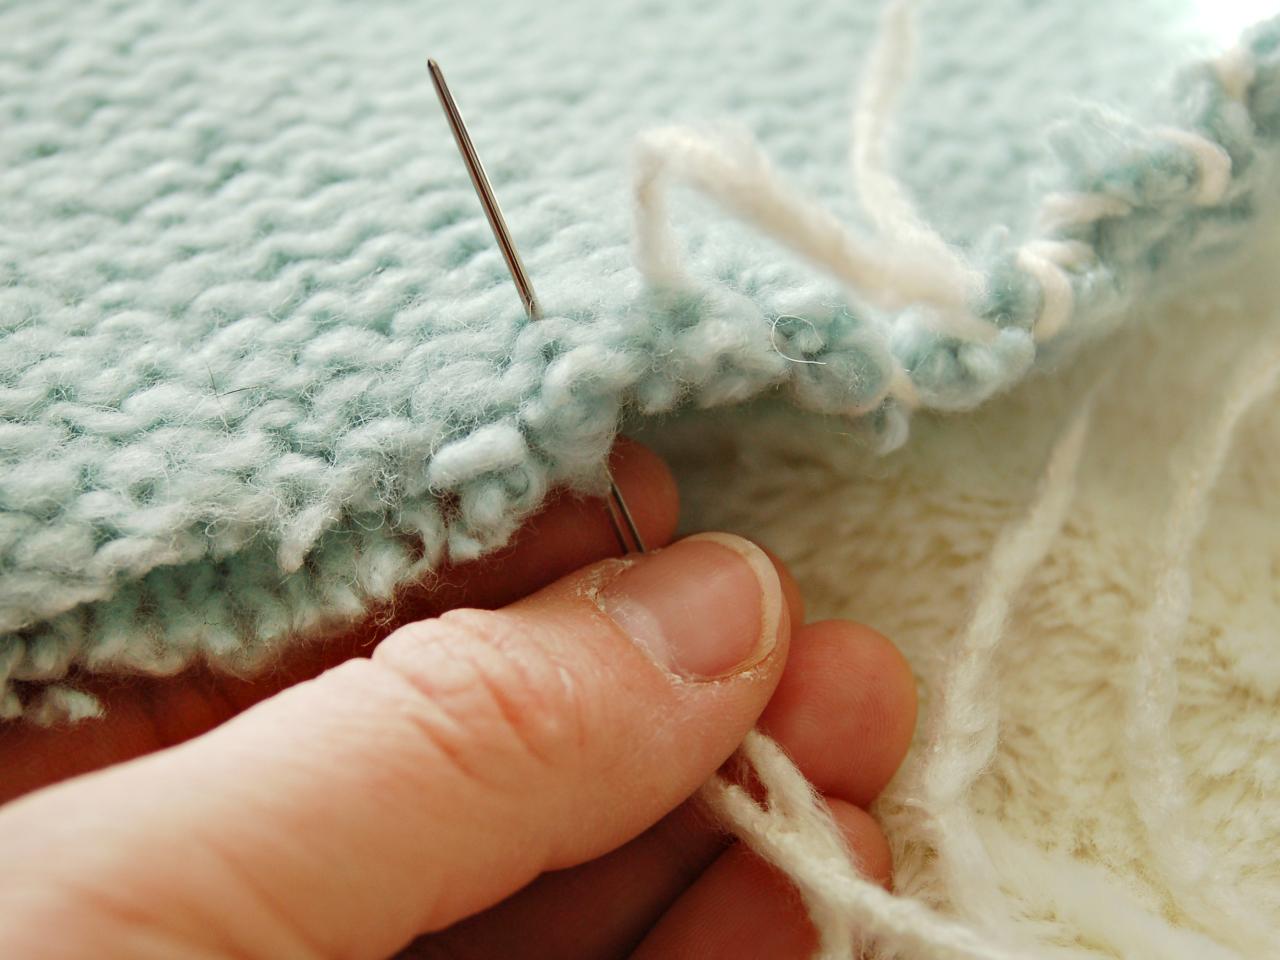 How to Make No-Knit Christmas Sweater Stockings | HGTV